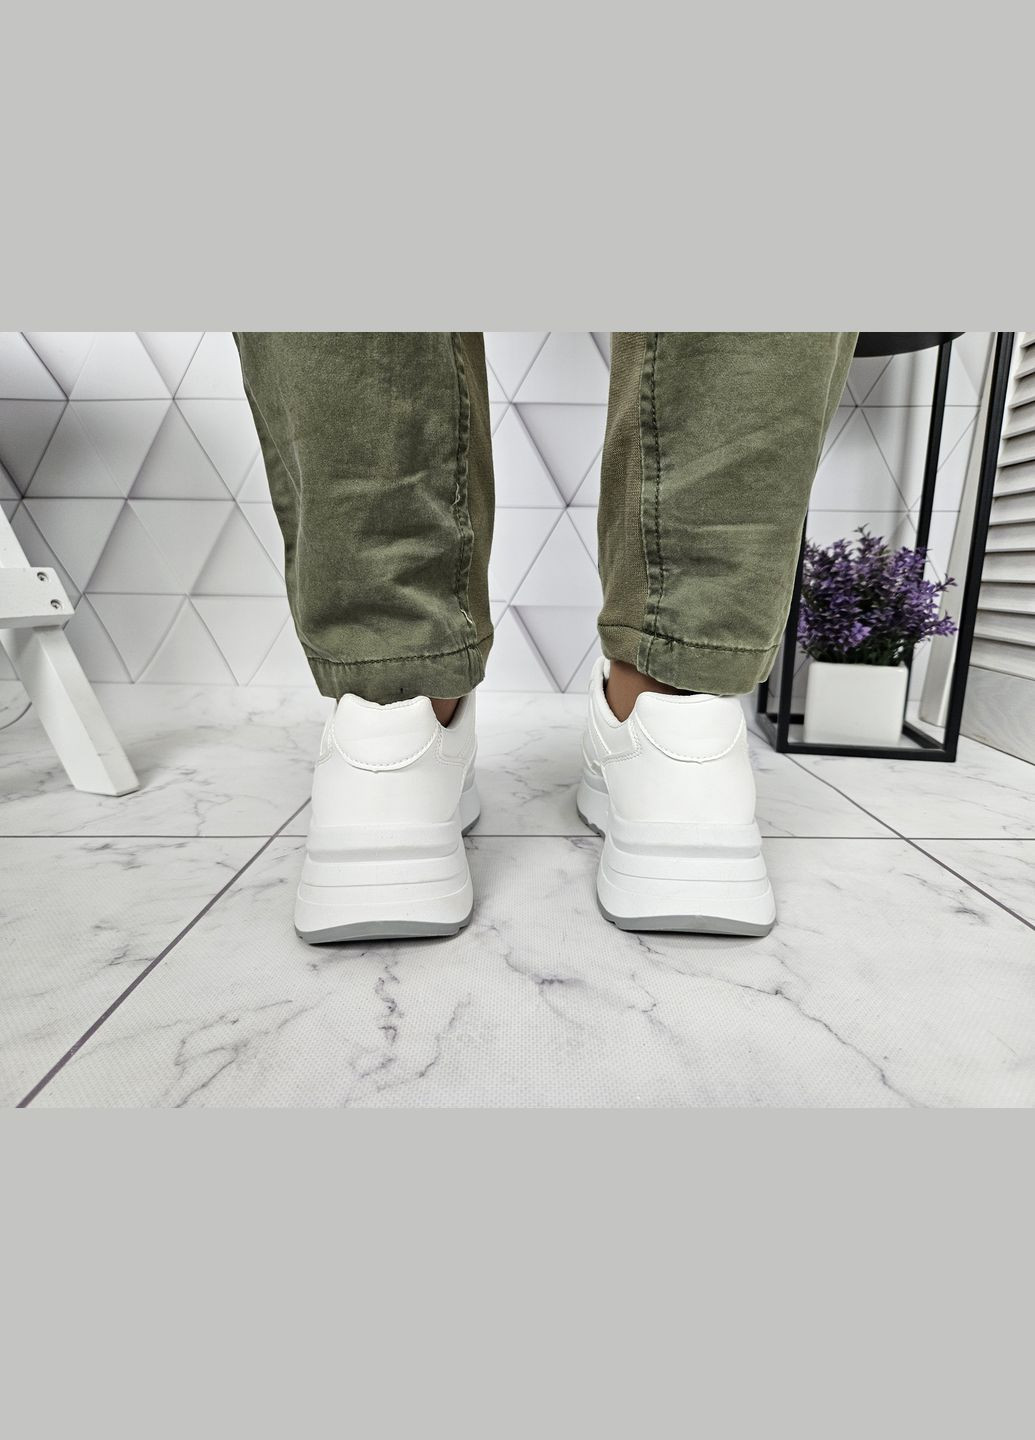 Белые кроссовки на платформе белые (24 см) sp-2950 No Brand